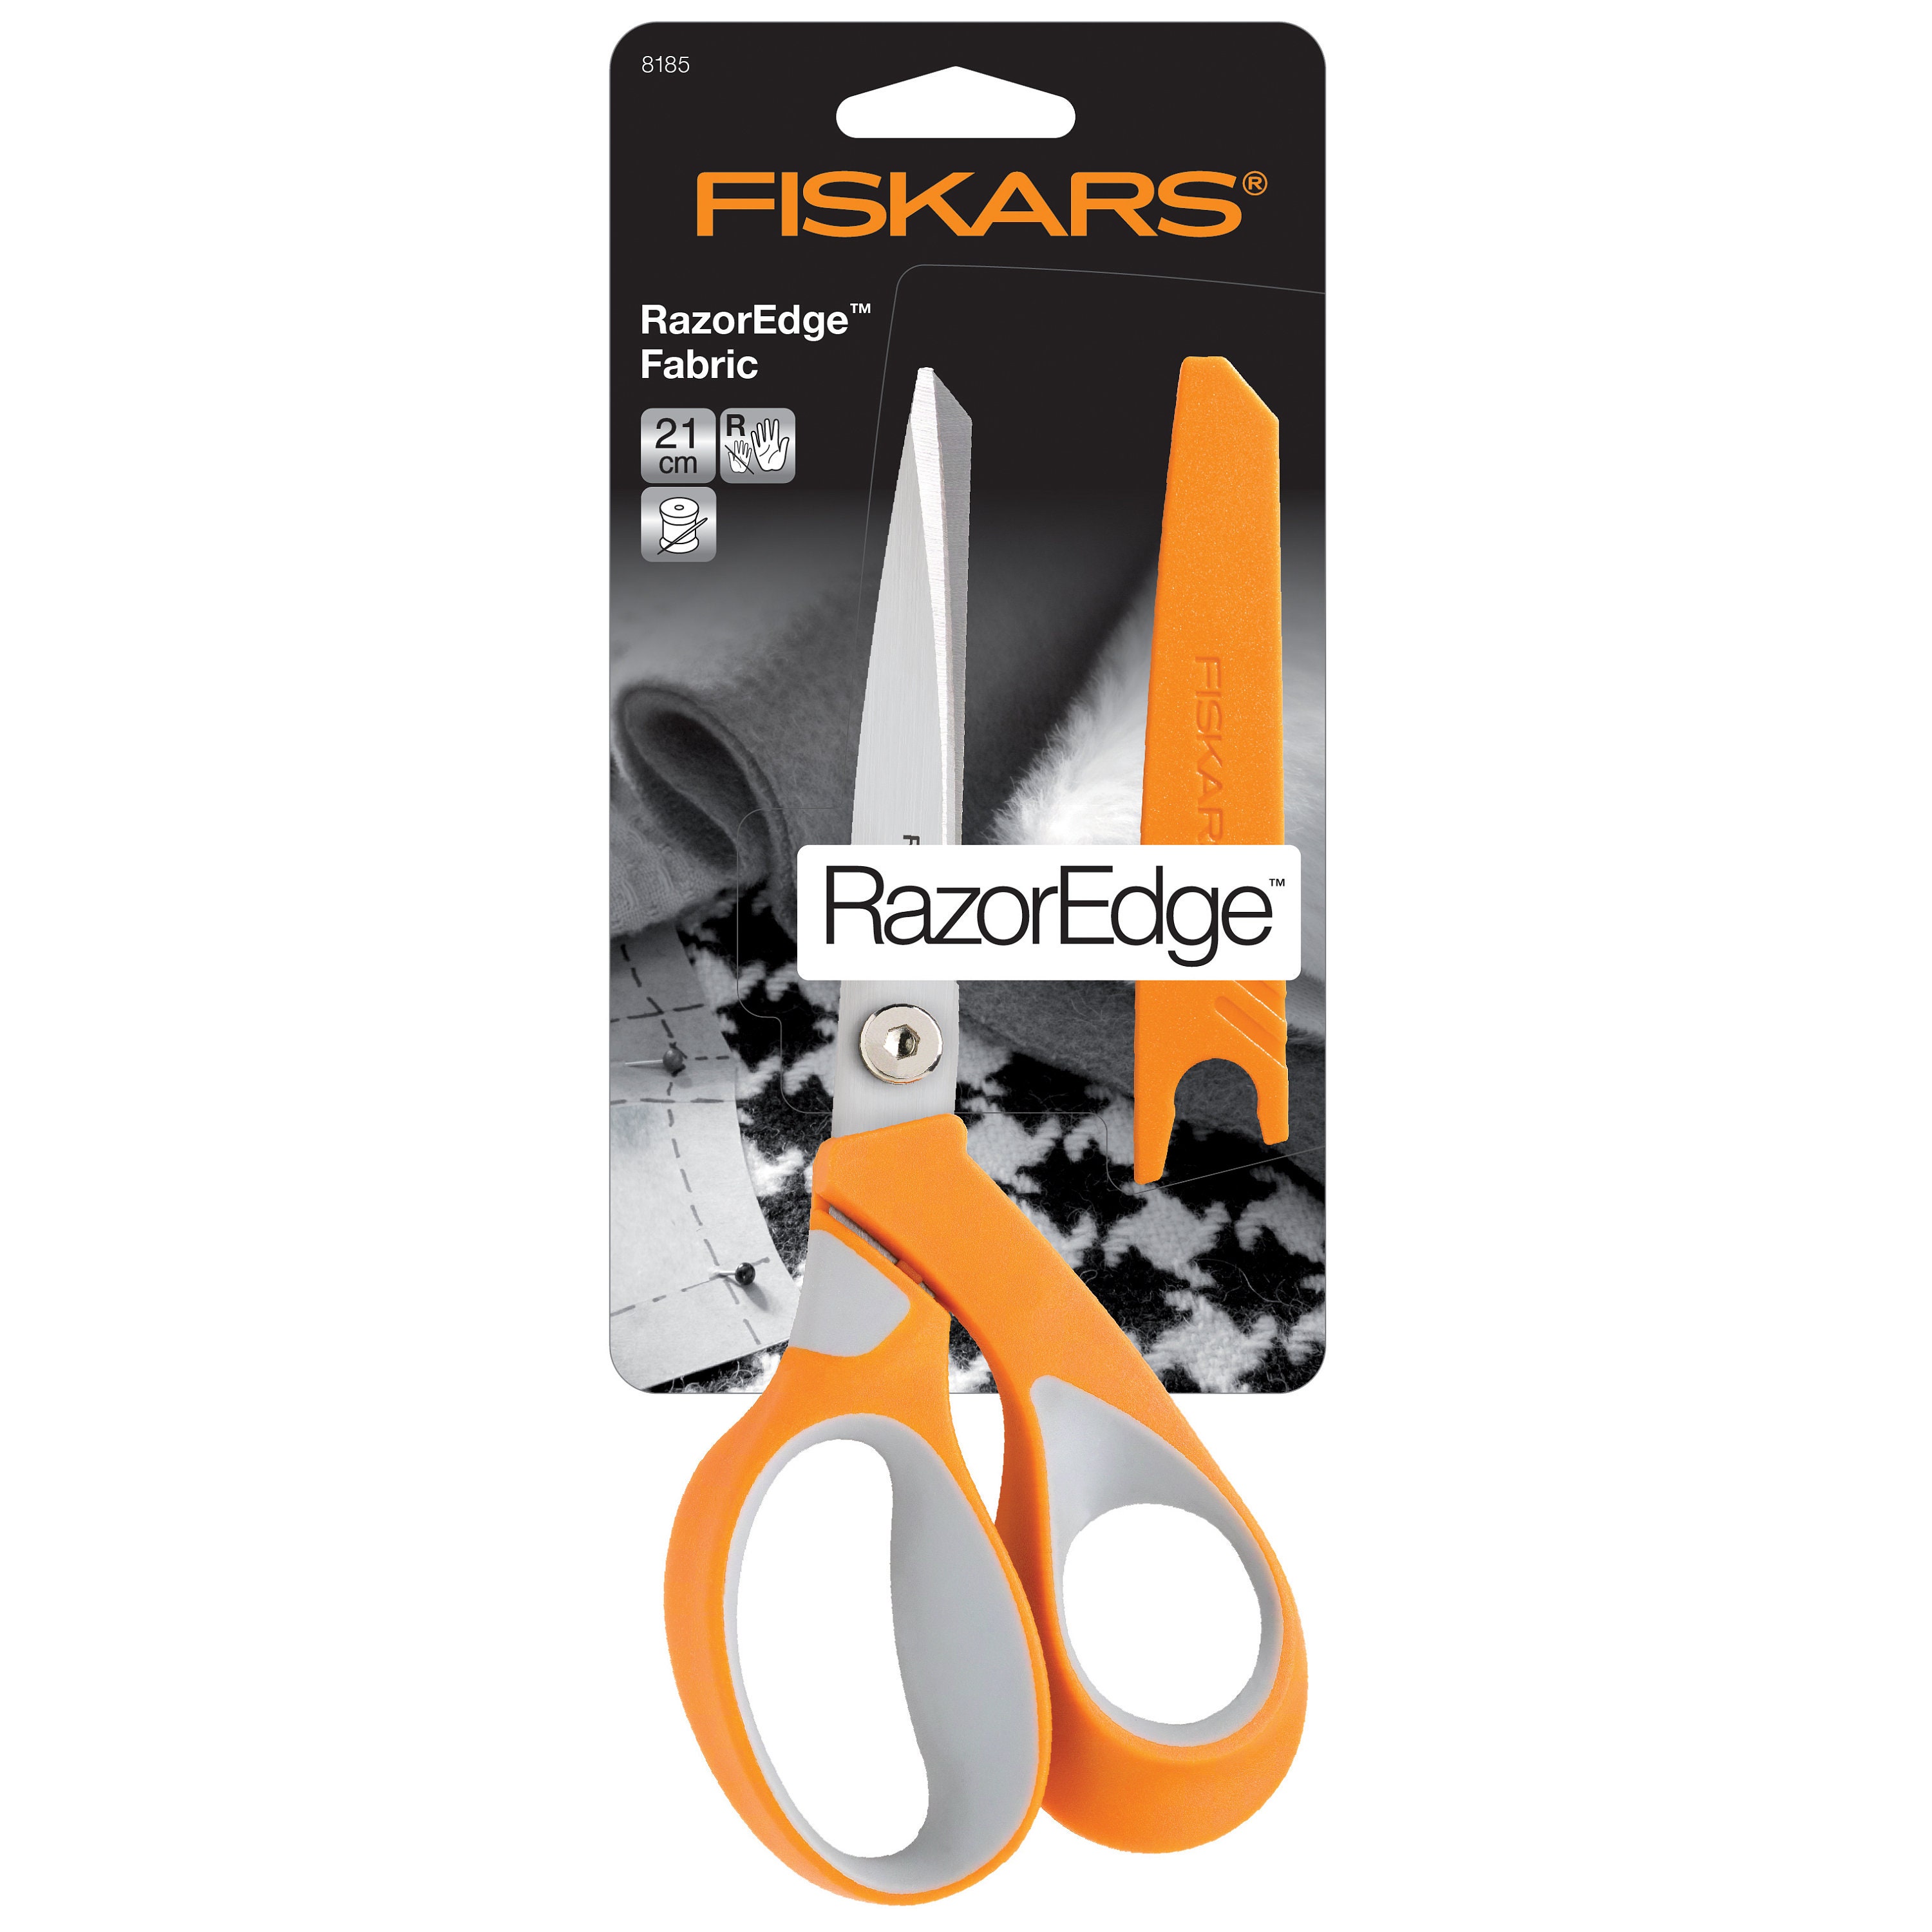 Fiskars ReNew cooking scissors, 21 cm